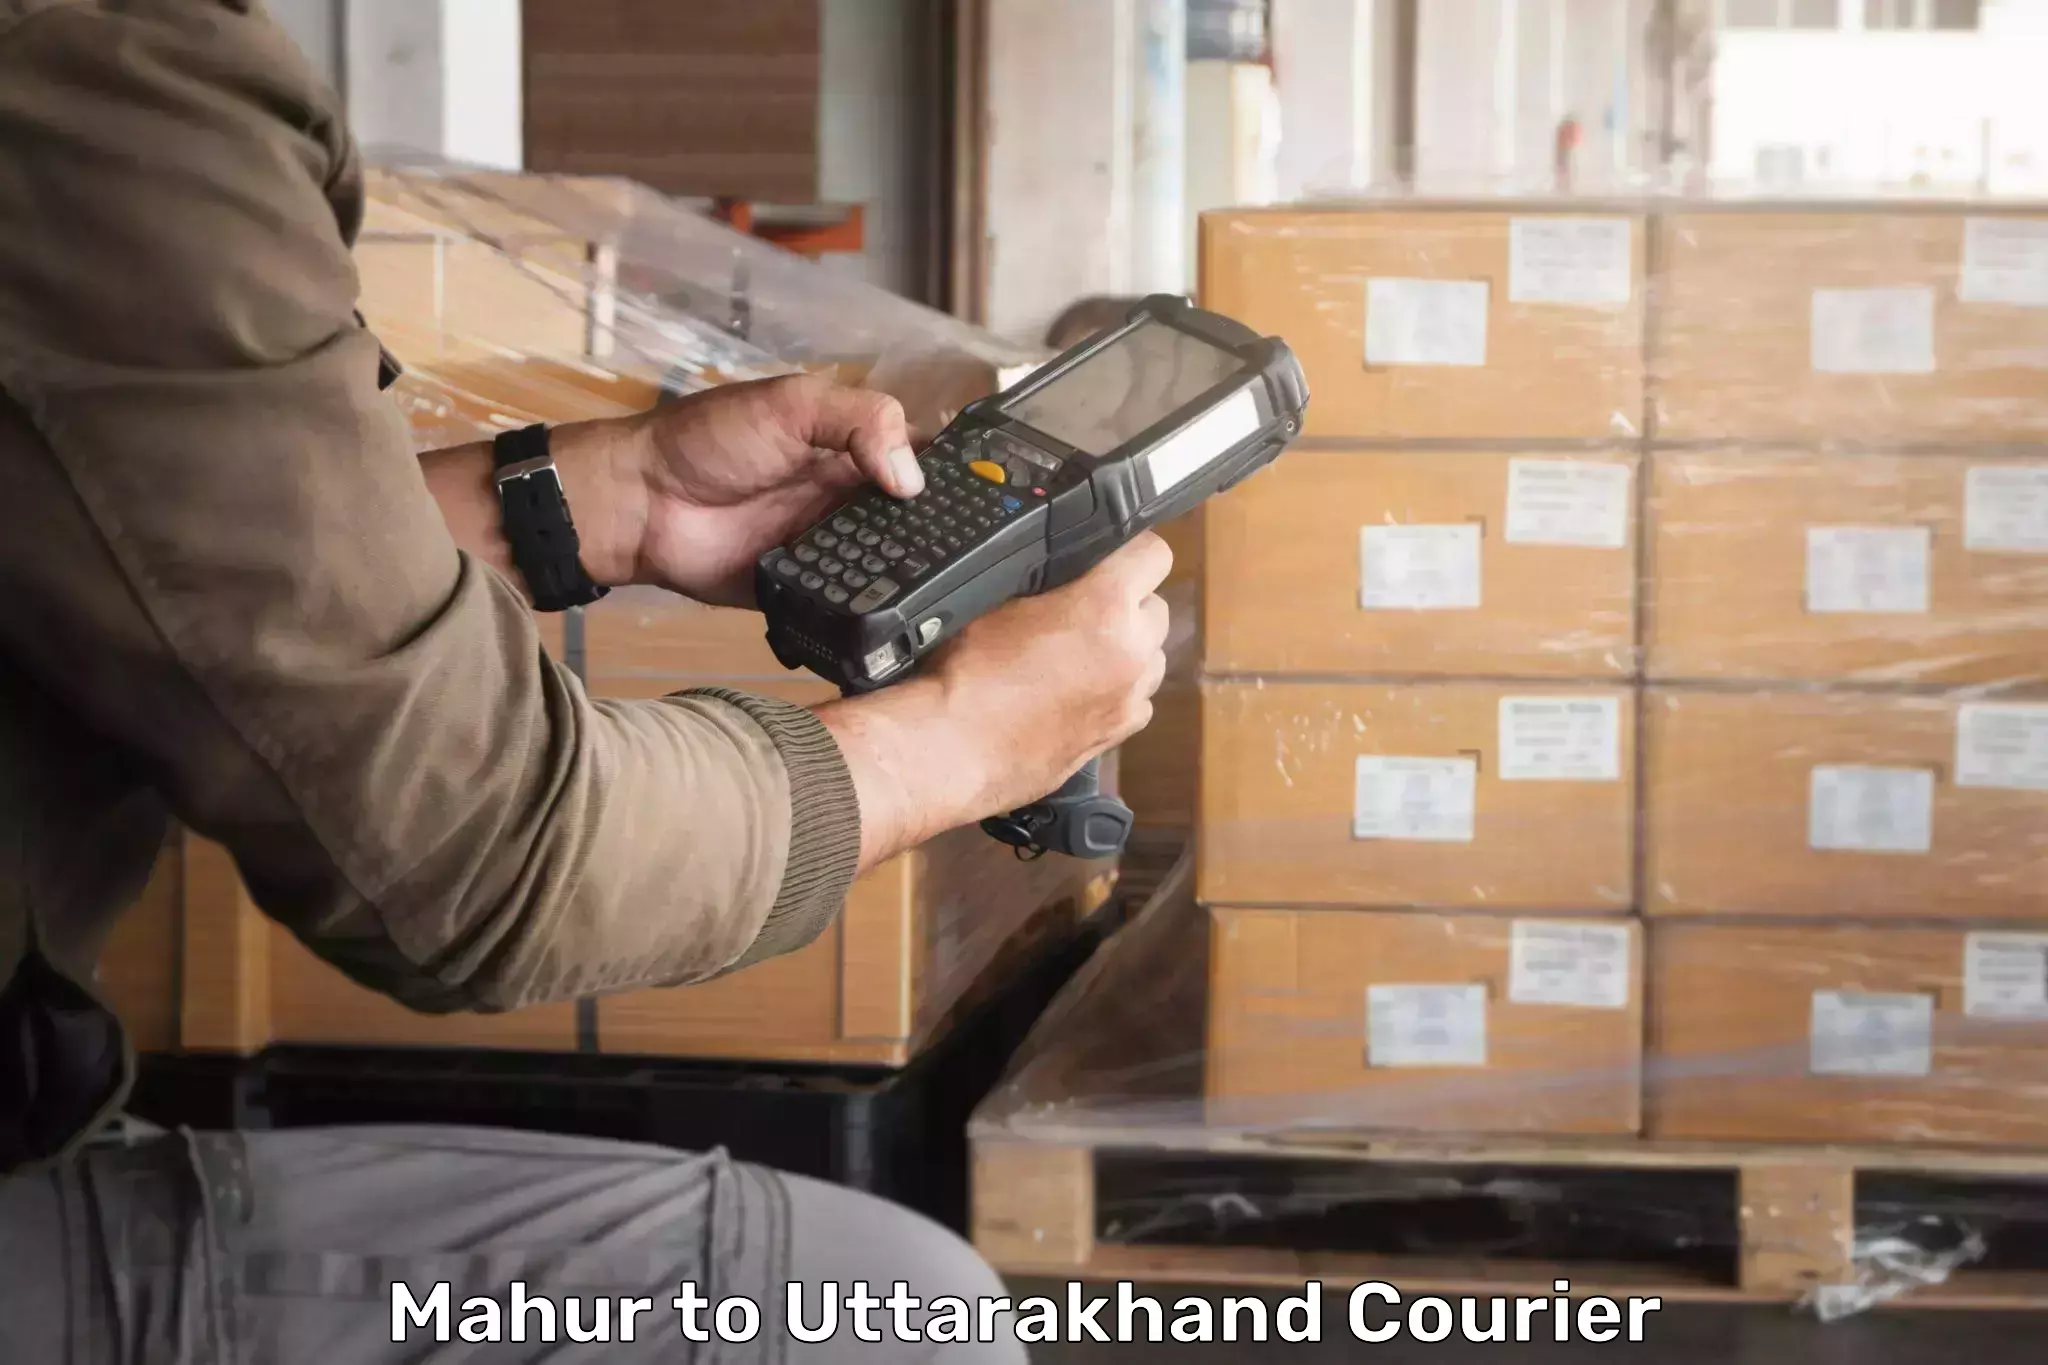 State-of-the-art courier technology Mahur to Uttarakhand